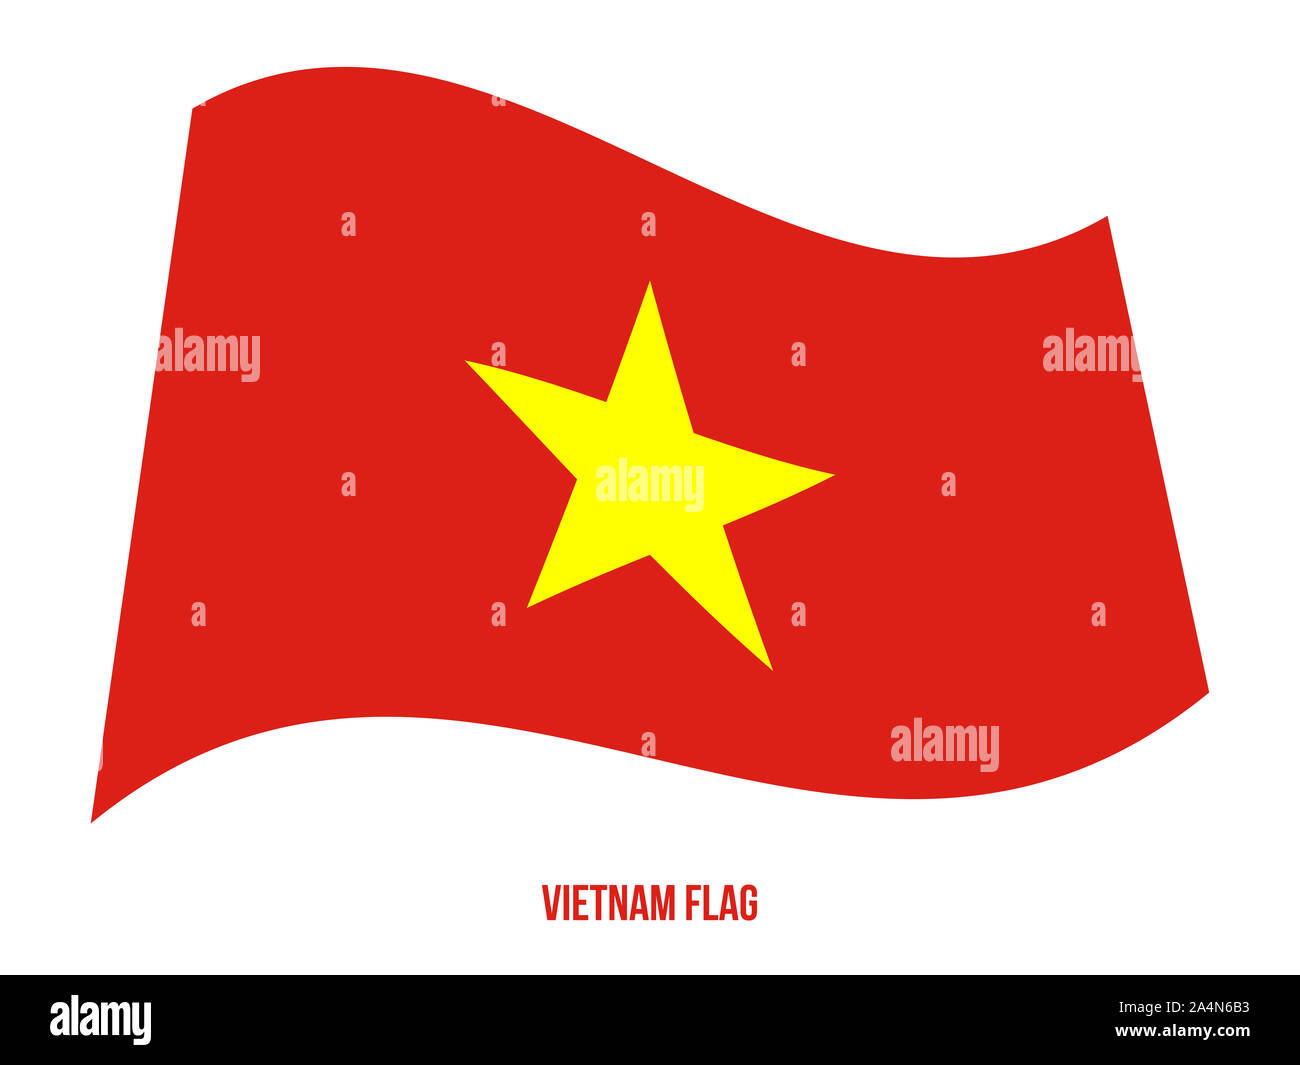 Vietnam Flag Waving Vector Illustration on White Background. Vietnam National Flag. Stock Photo